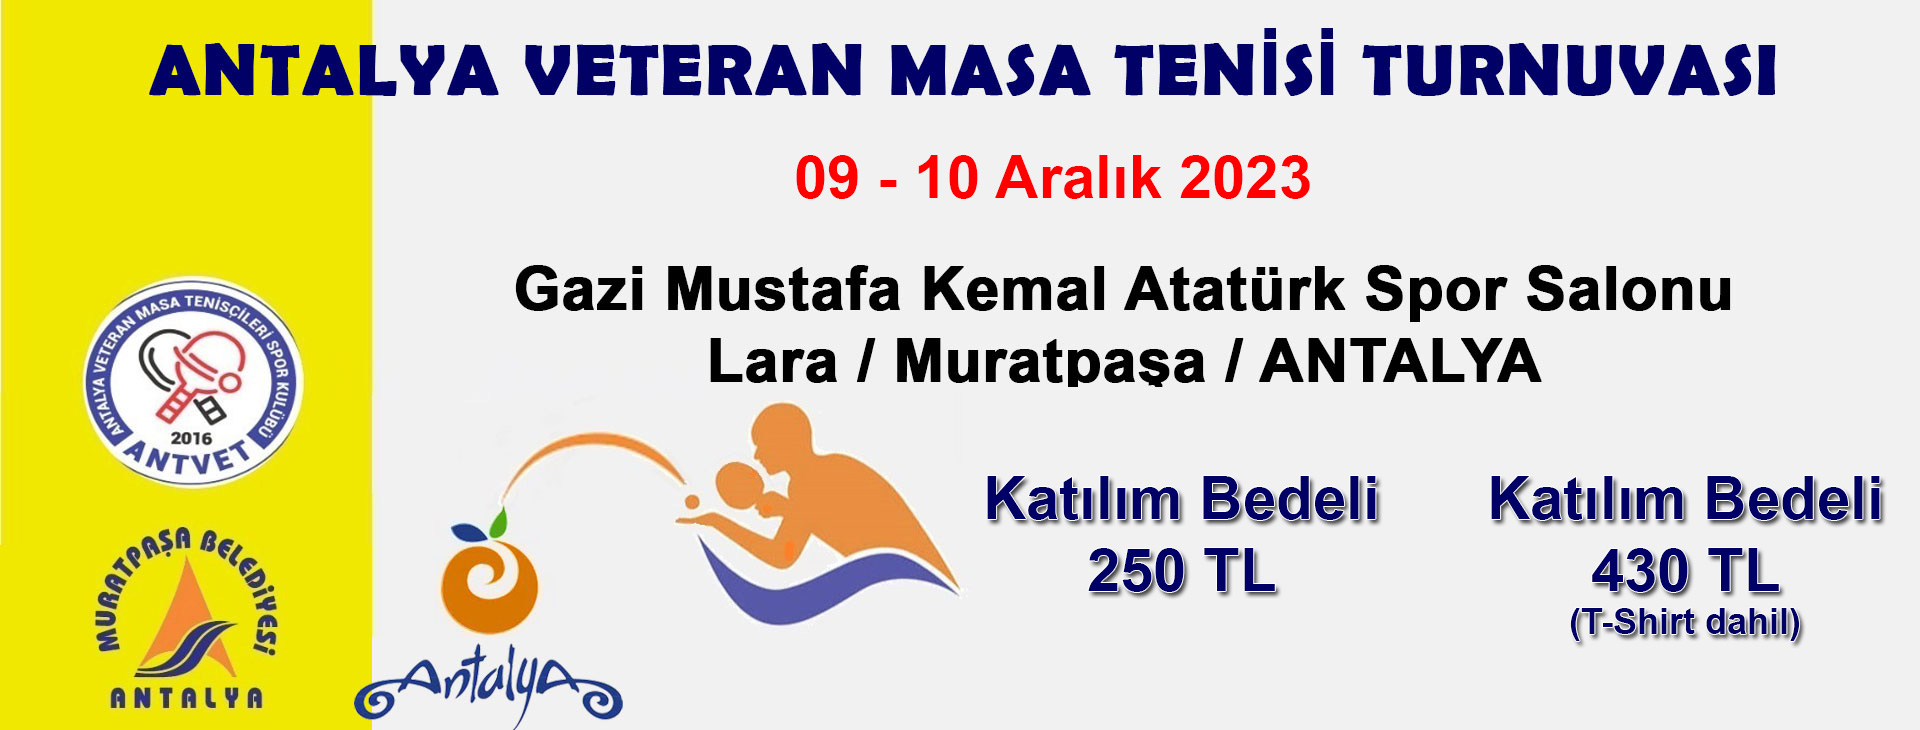 Antalya Veteran Masa Tenisi Turnuvası